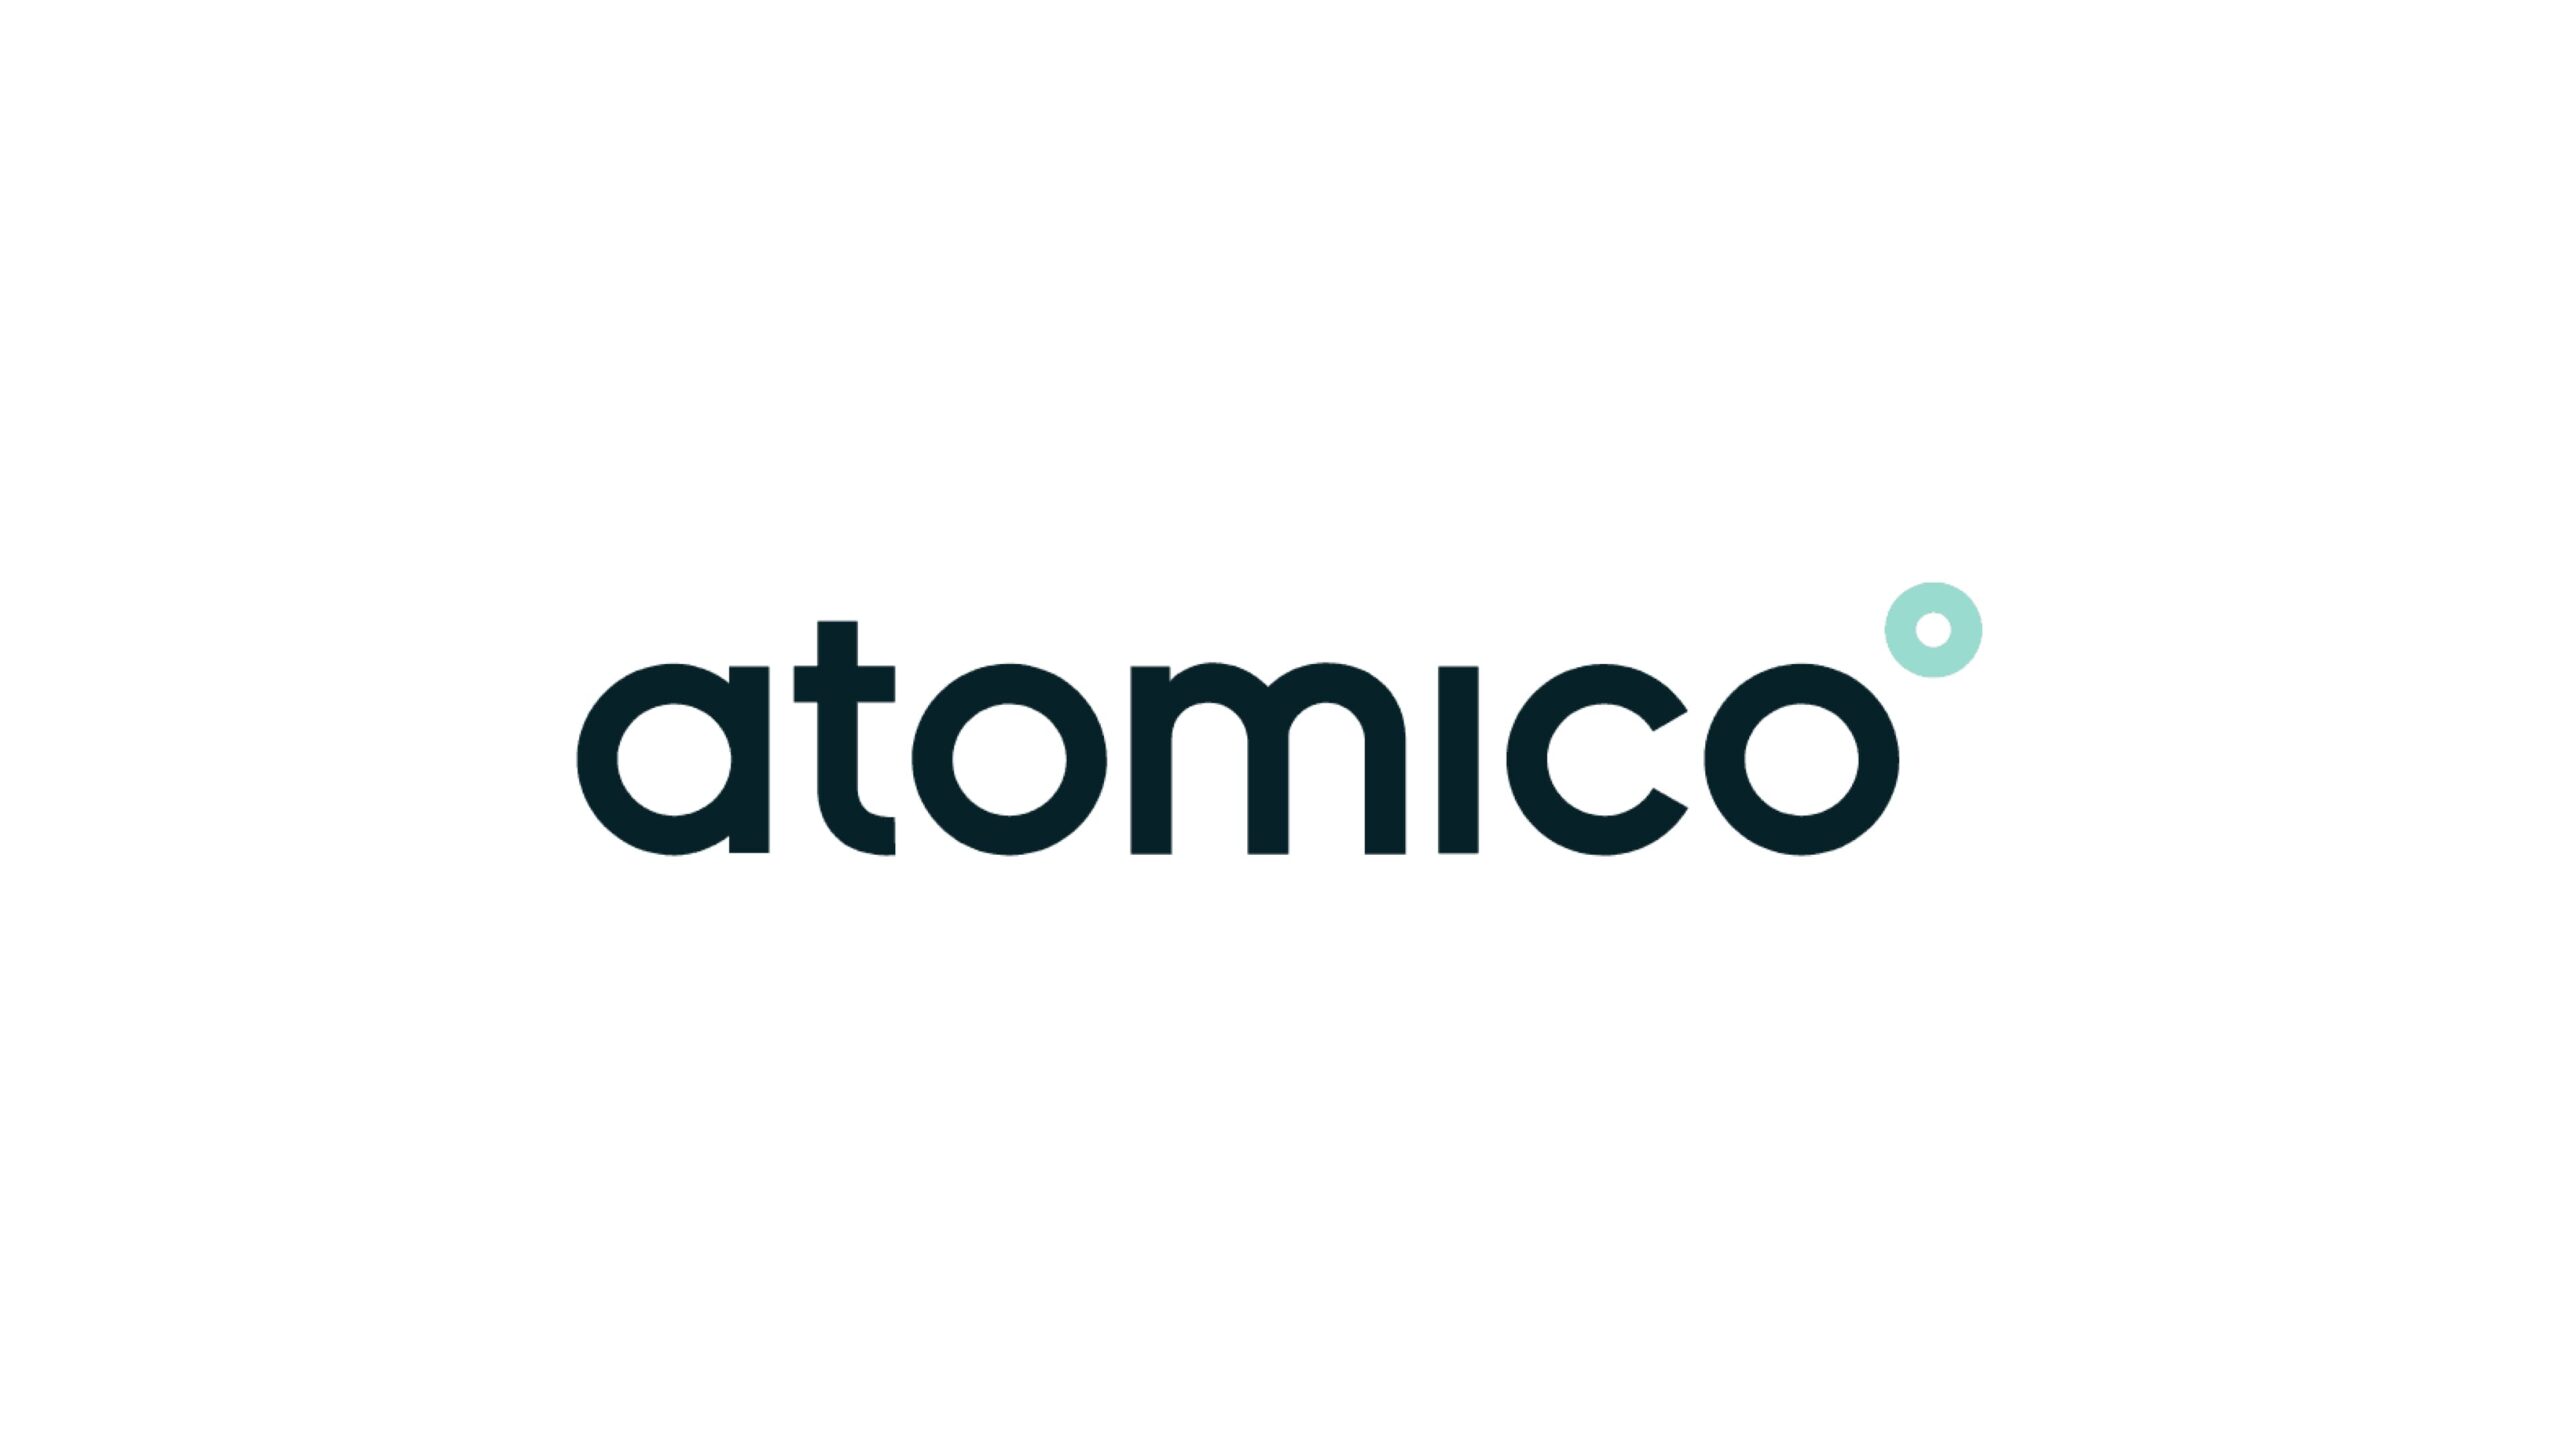 Atomico Venture VI SCSpおよびAtomico Growth VI SCSp、それぞれ2,000万ドル、3,000万ドルを調達